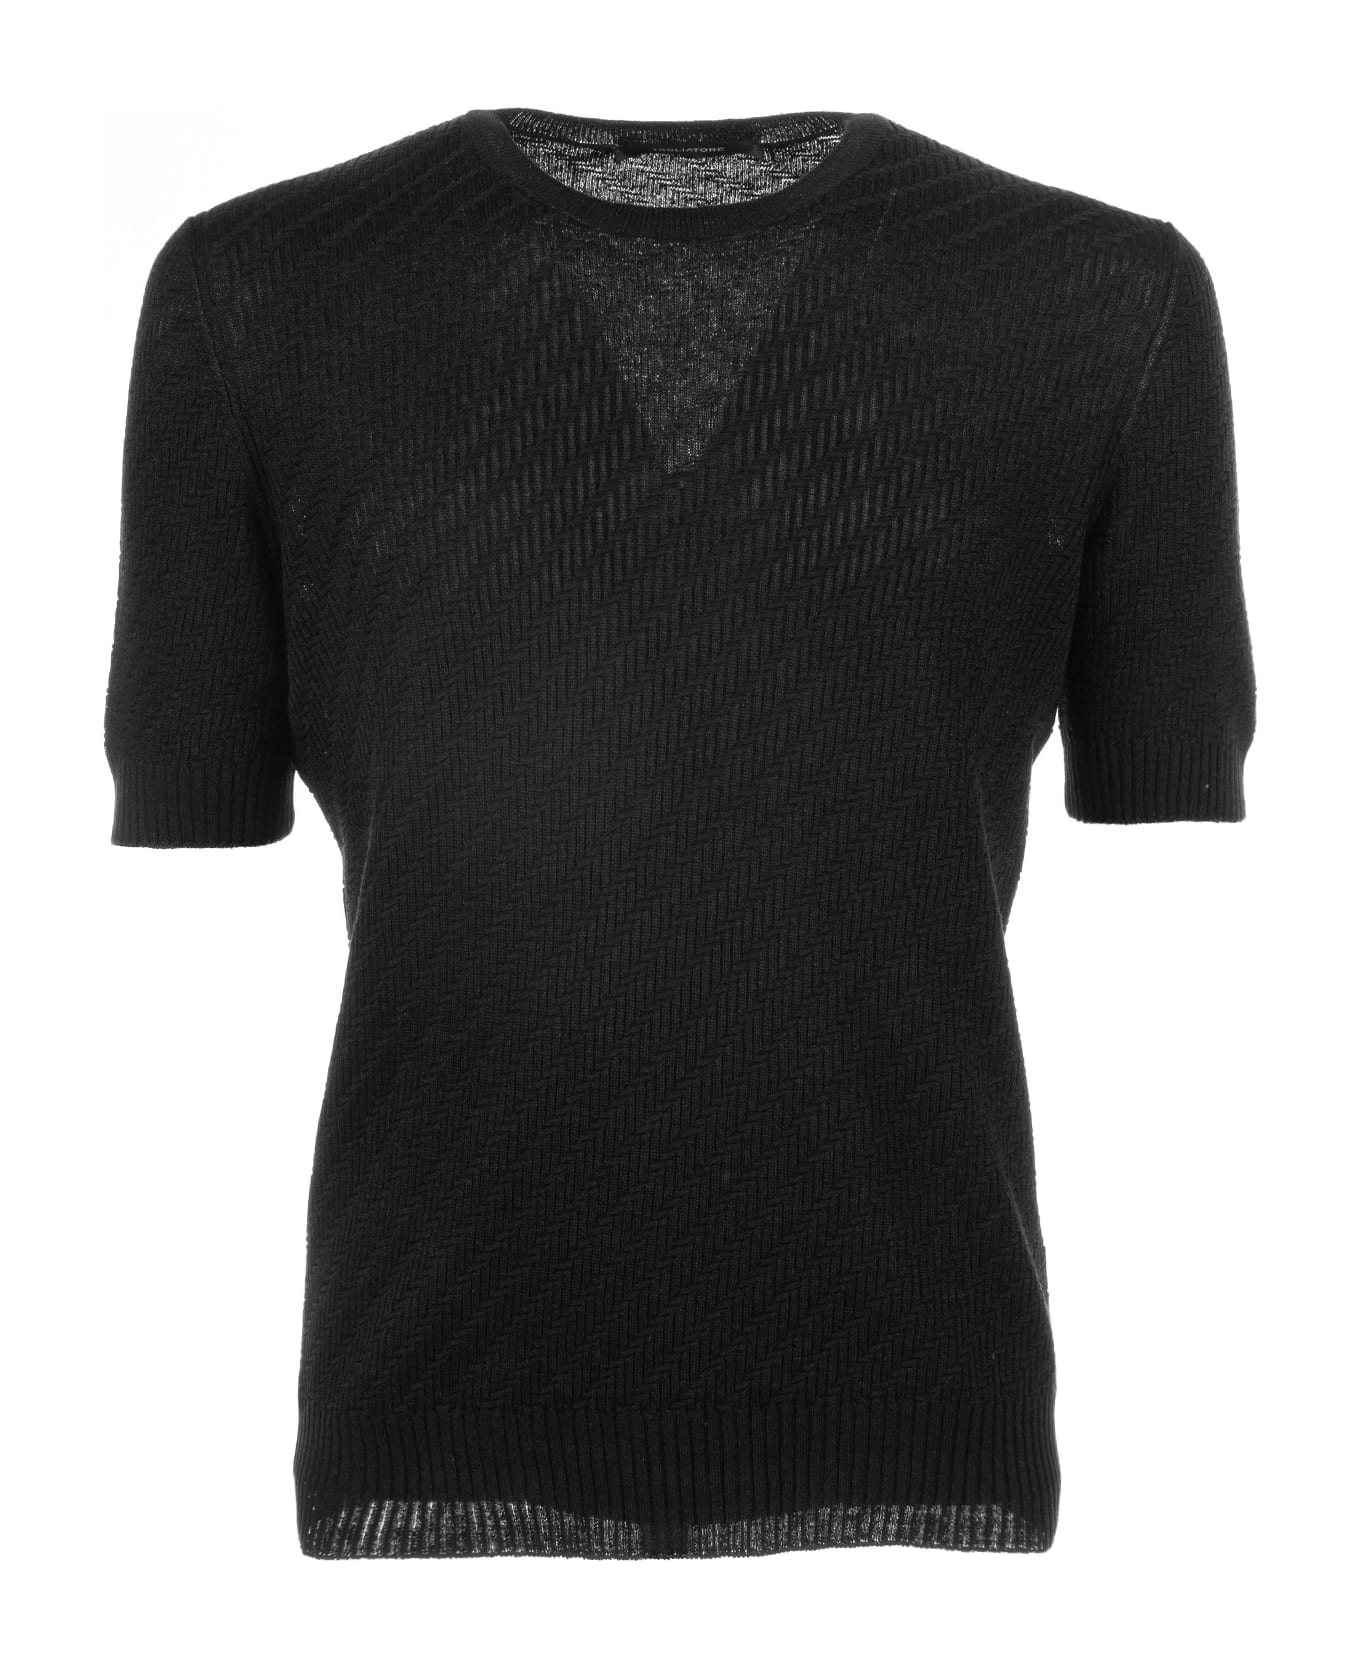 Tagliatore Black Knitted T-shirt - NERO